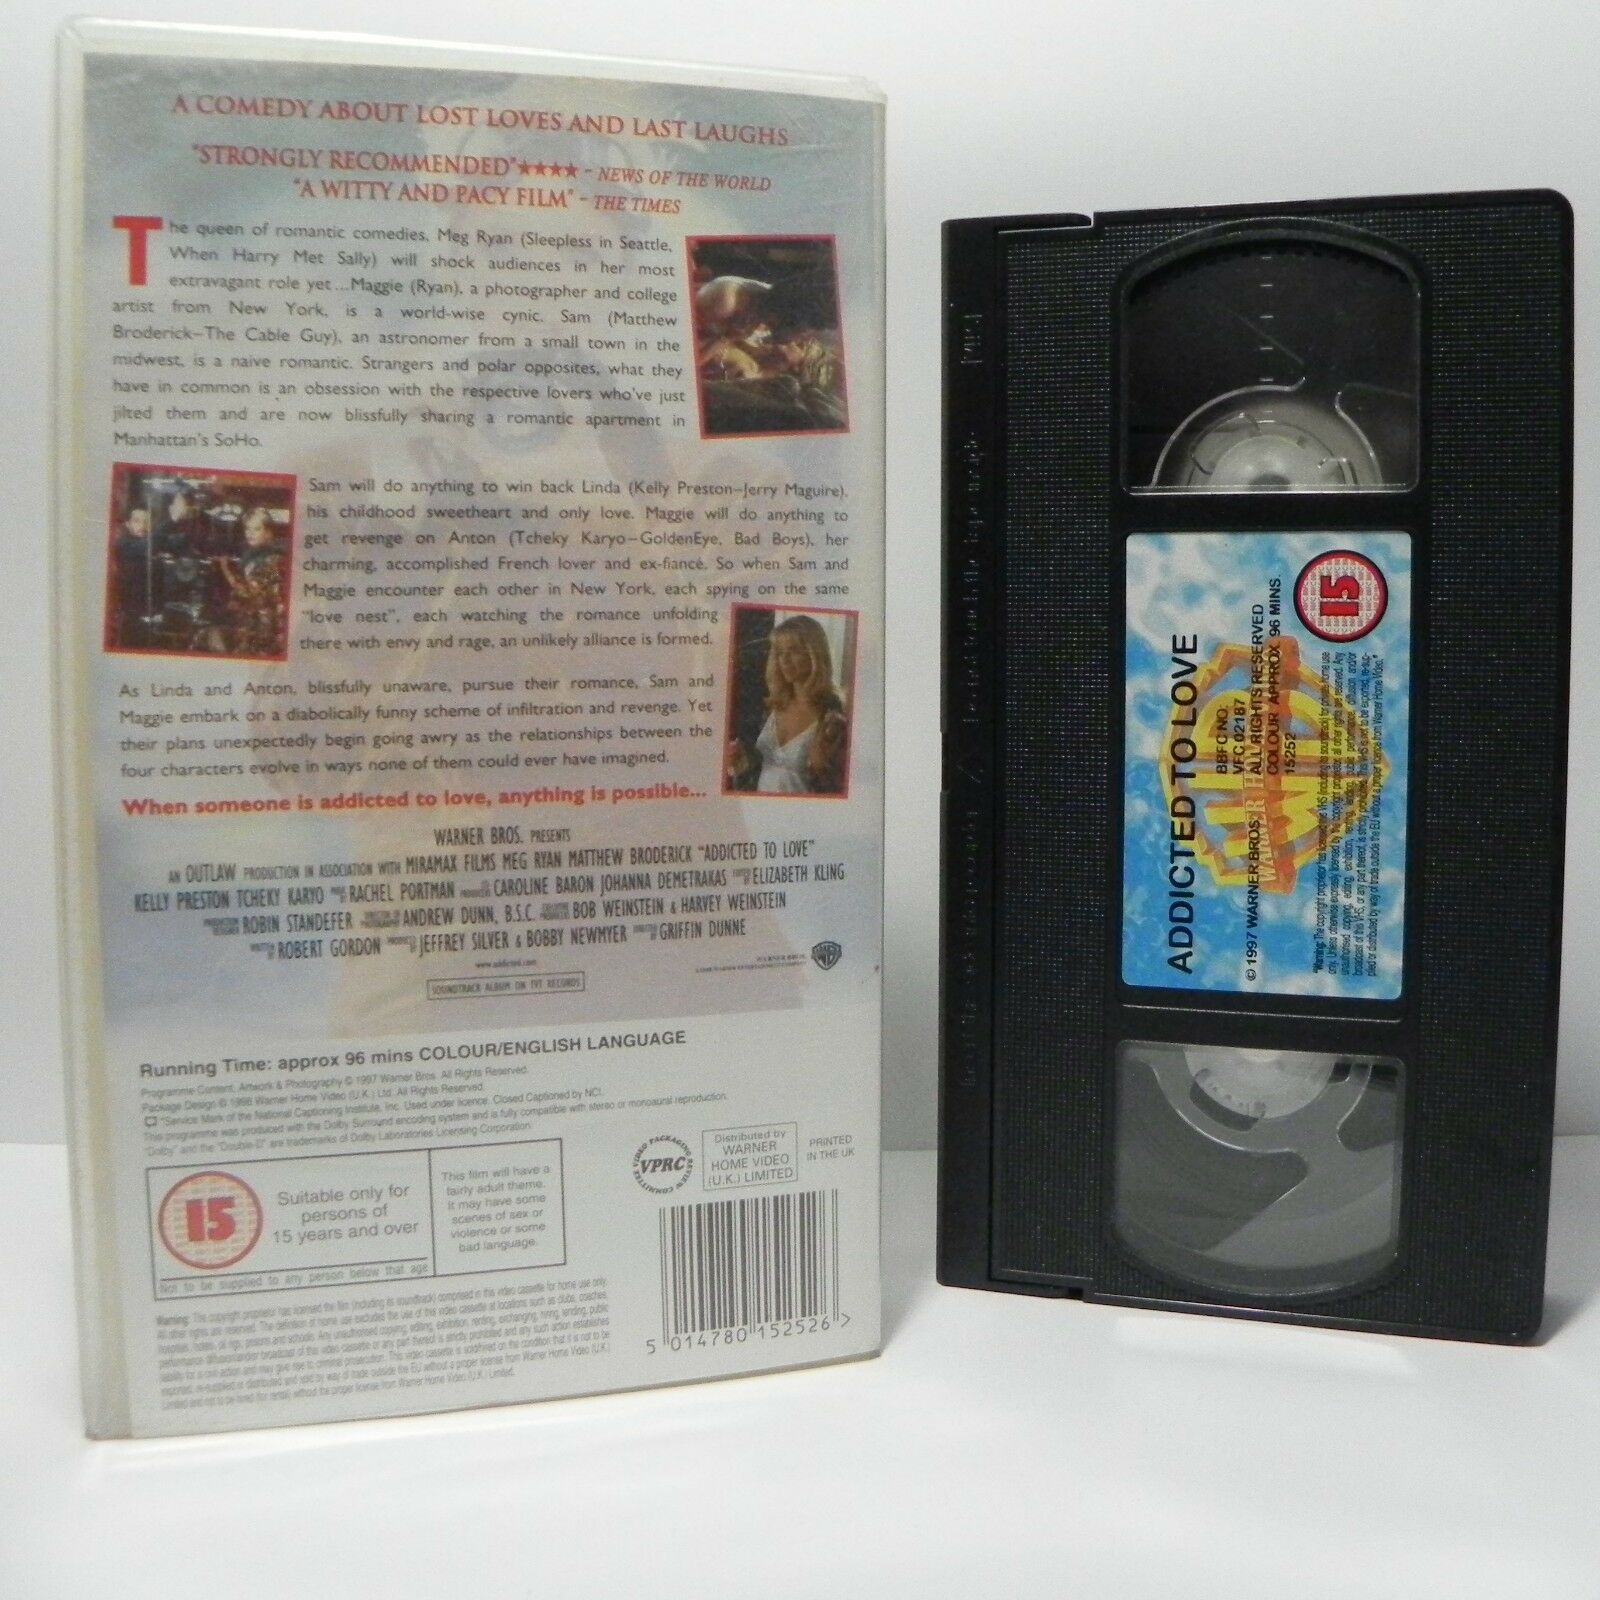 Addicted To Love: (1997) Romantic Comedy - Meg Ryan/Matthew Broderick - Pal VHS-